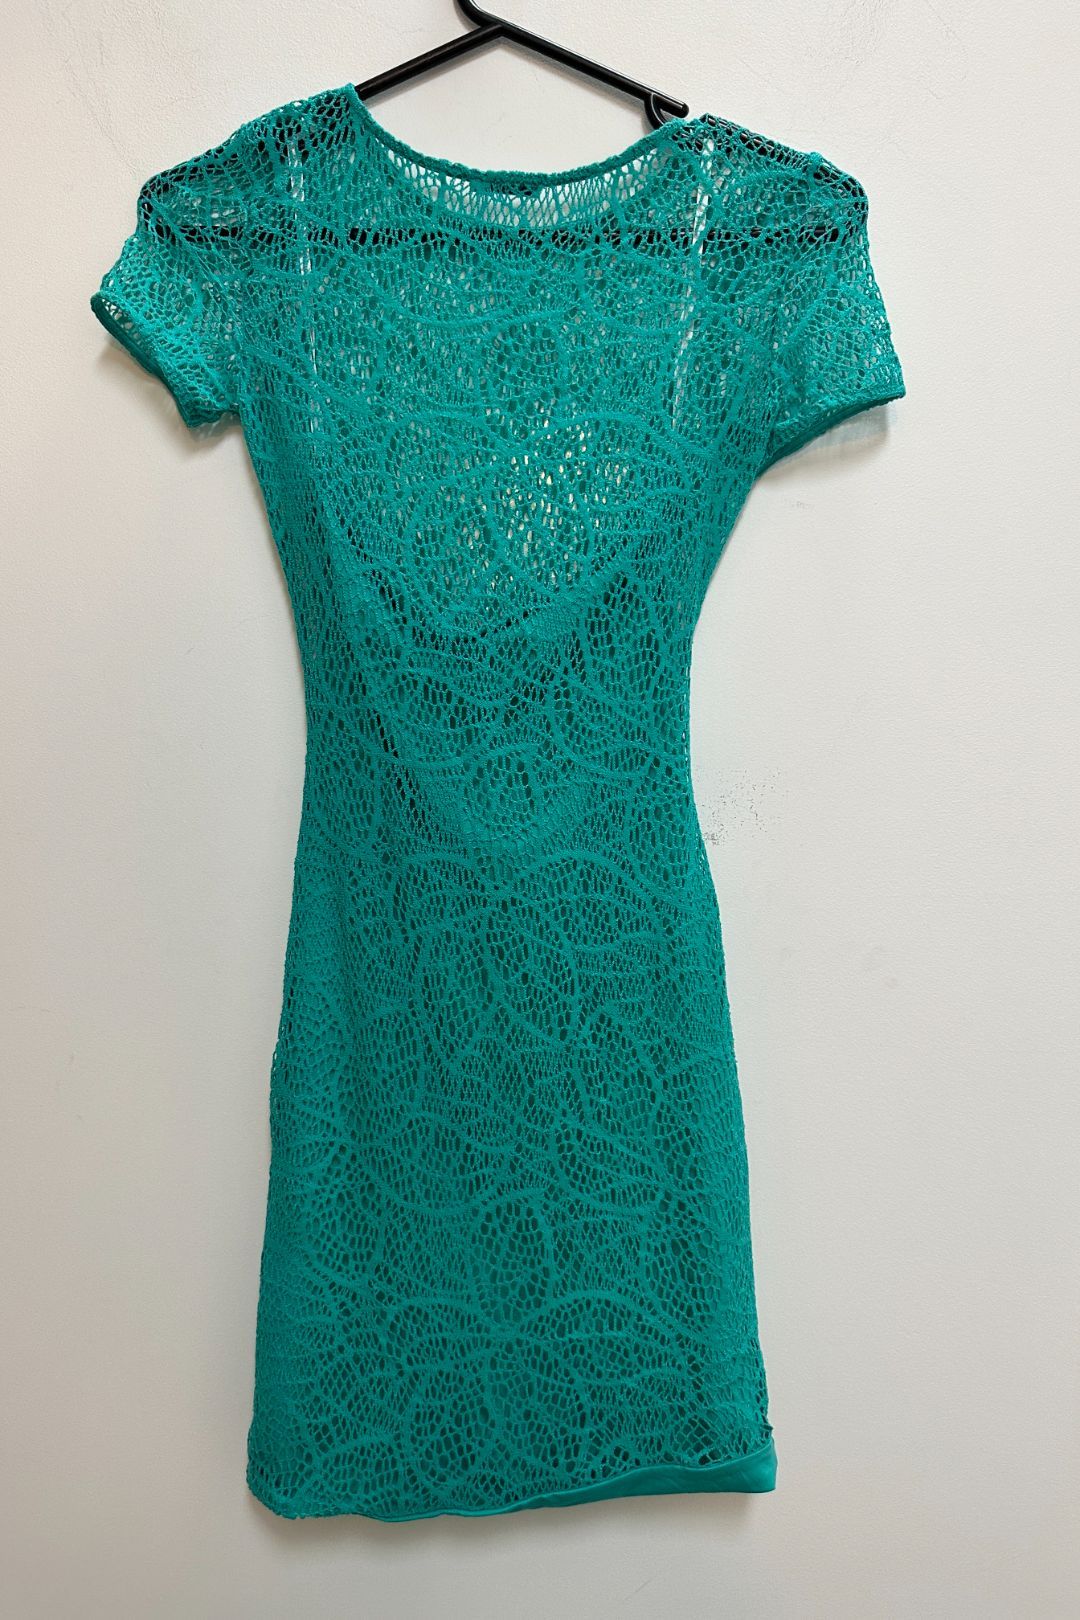 Kookai Green Lace Mini Dress